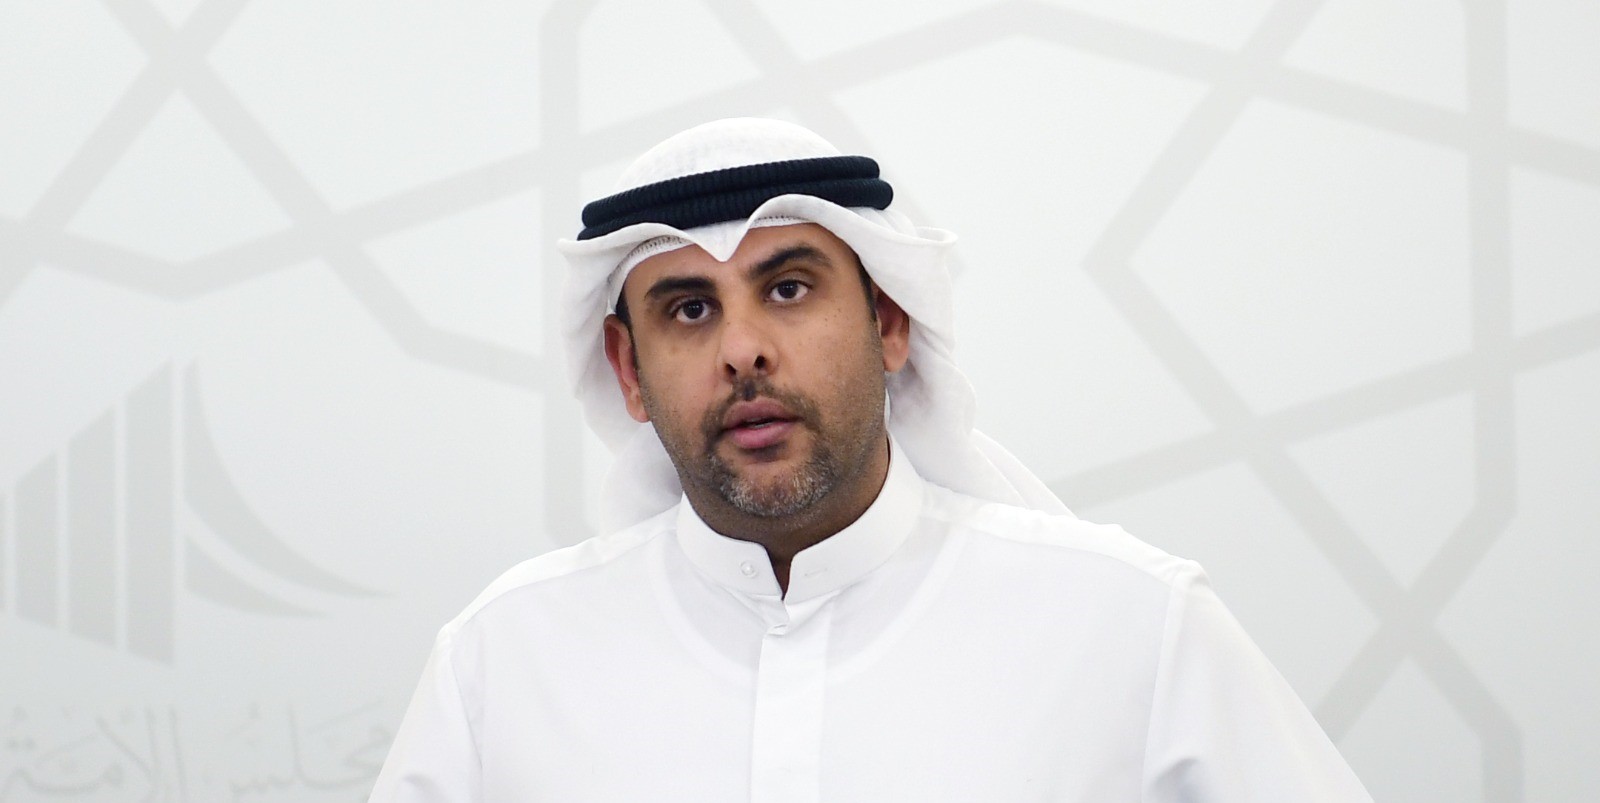 MP Yousef Al-Fadhalah